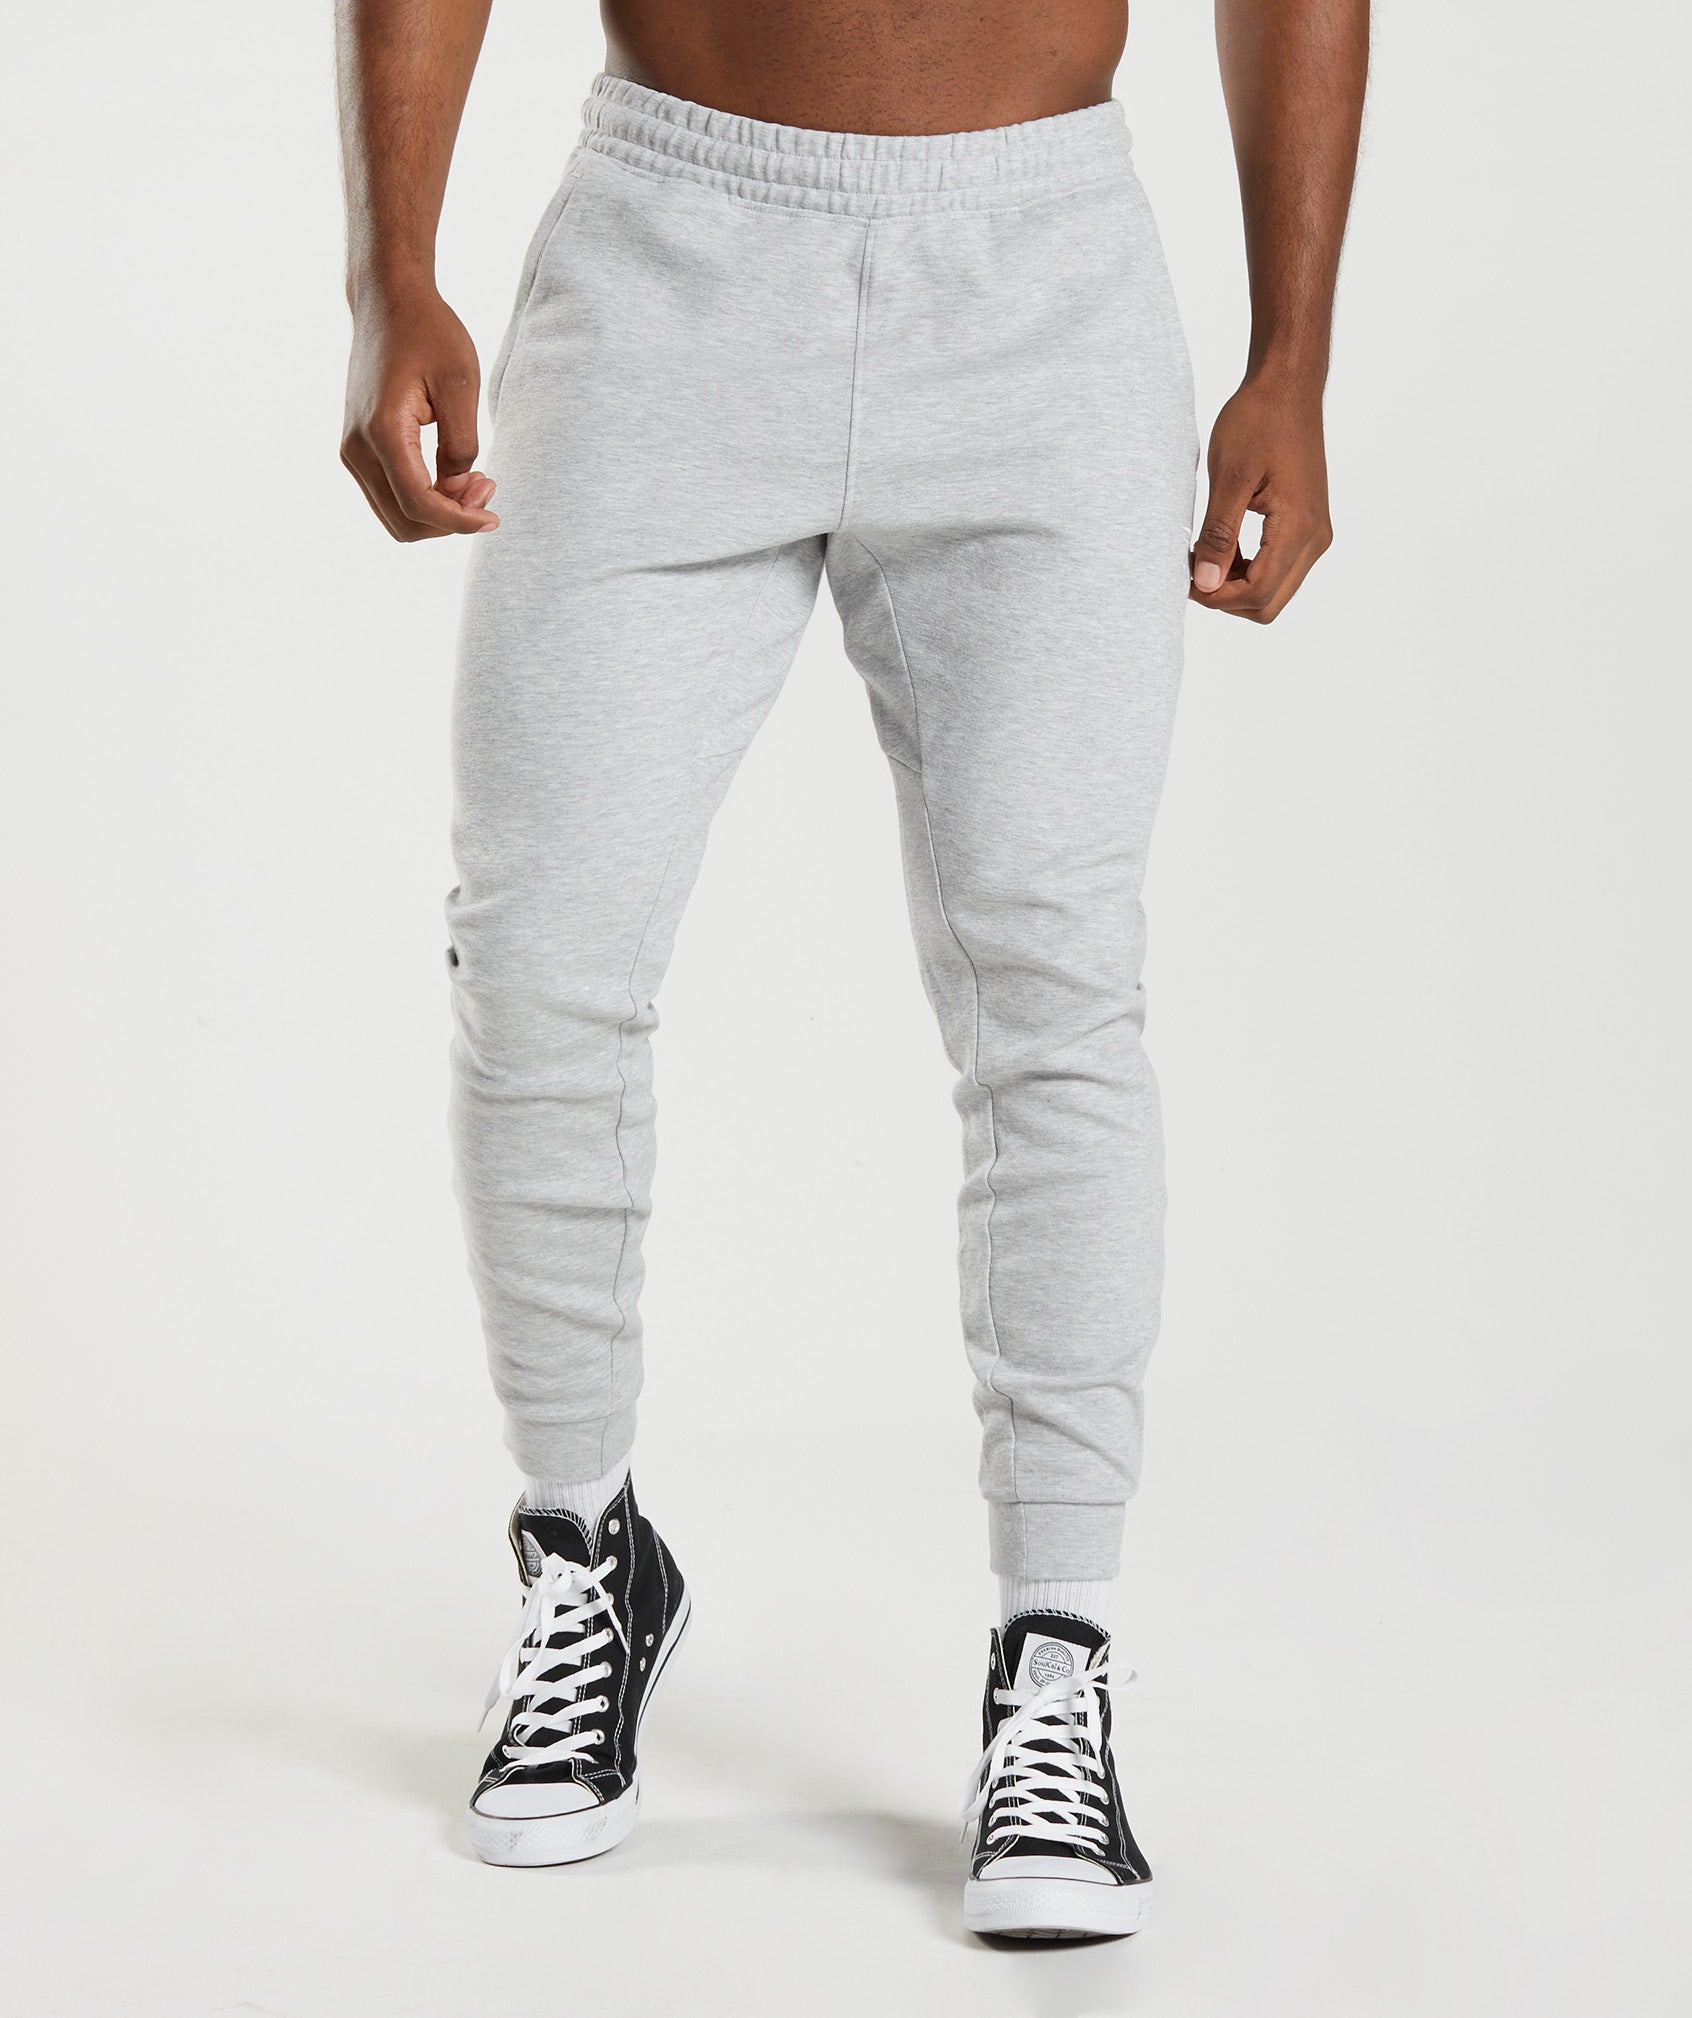 Gymshark sweatpants gray - Gem